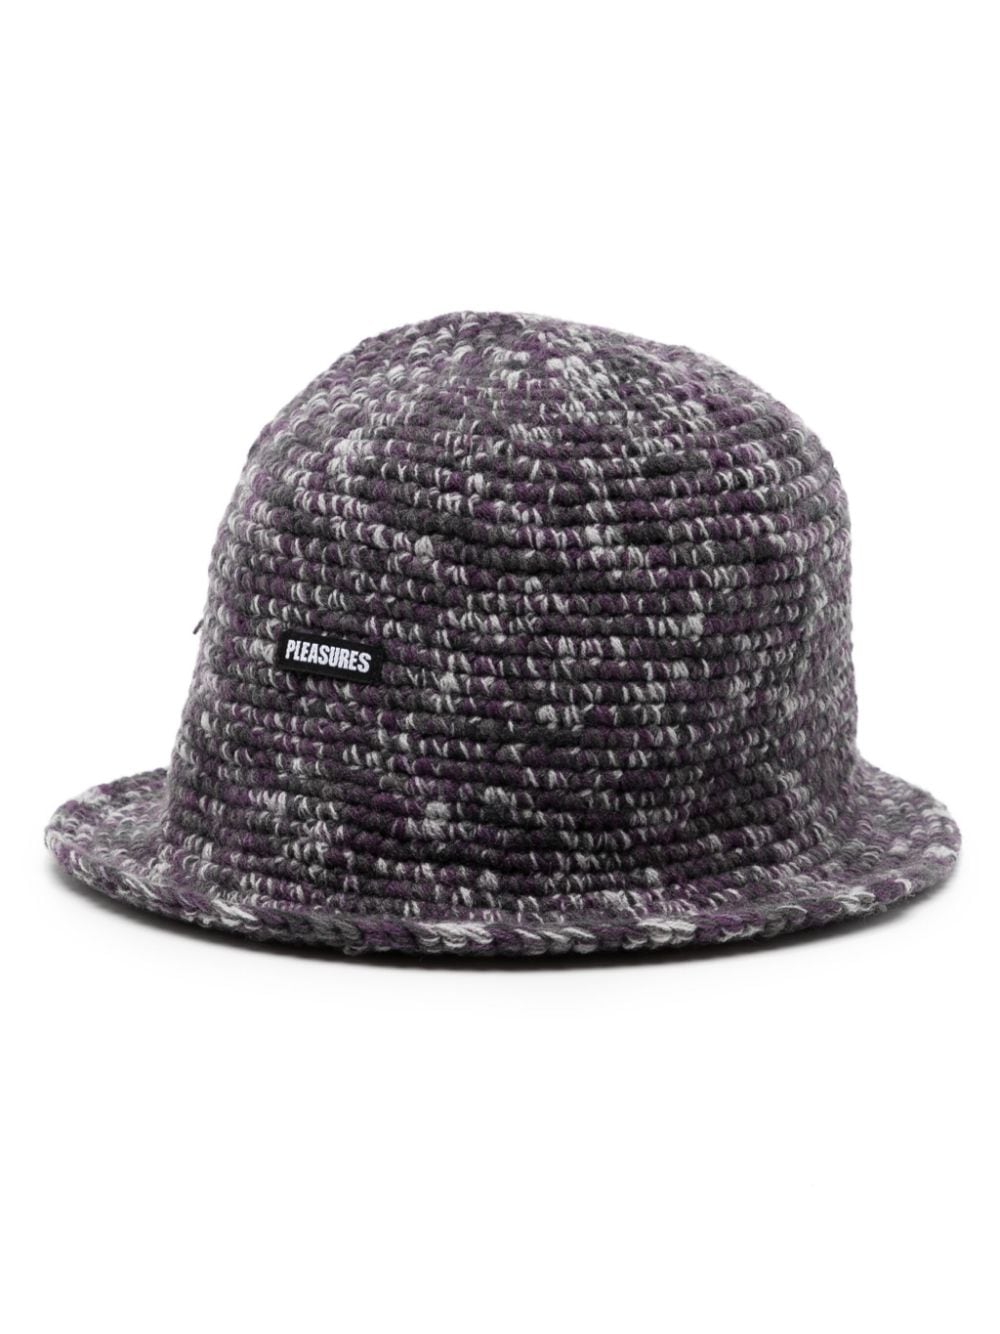 Pleasures logo-appliqué knitted hat - Purple von Pleasures